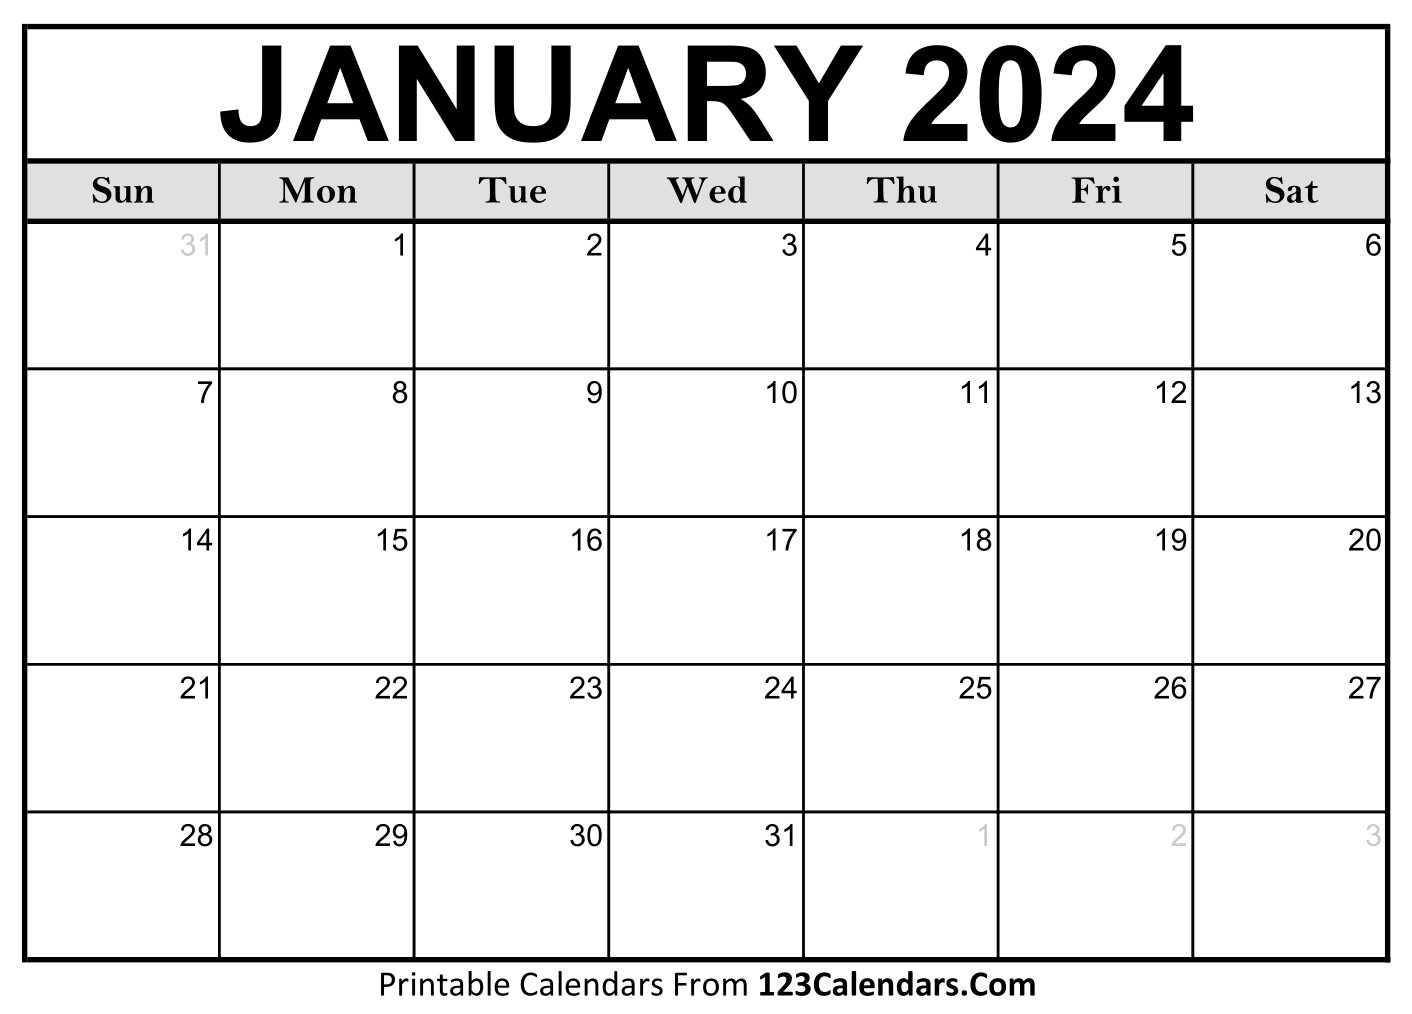 Printable January 2024 Calendar Templates - 123Calendars for Blank January Calendar 2024 Printable